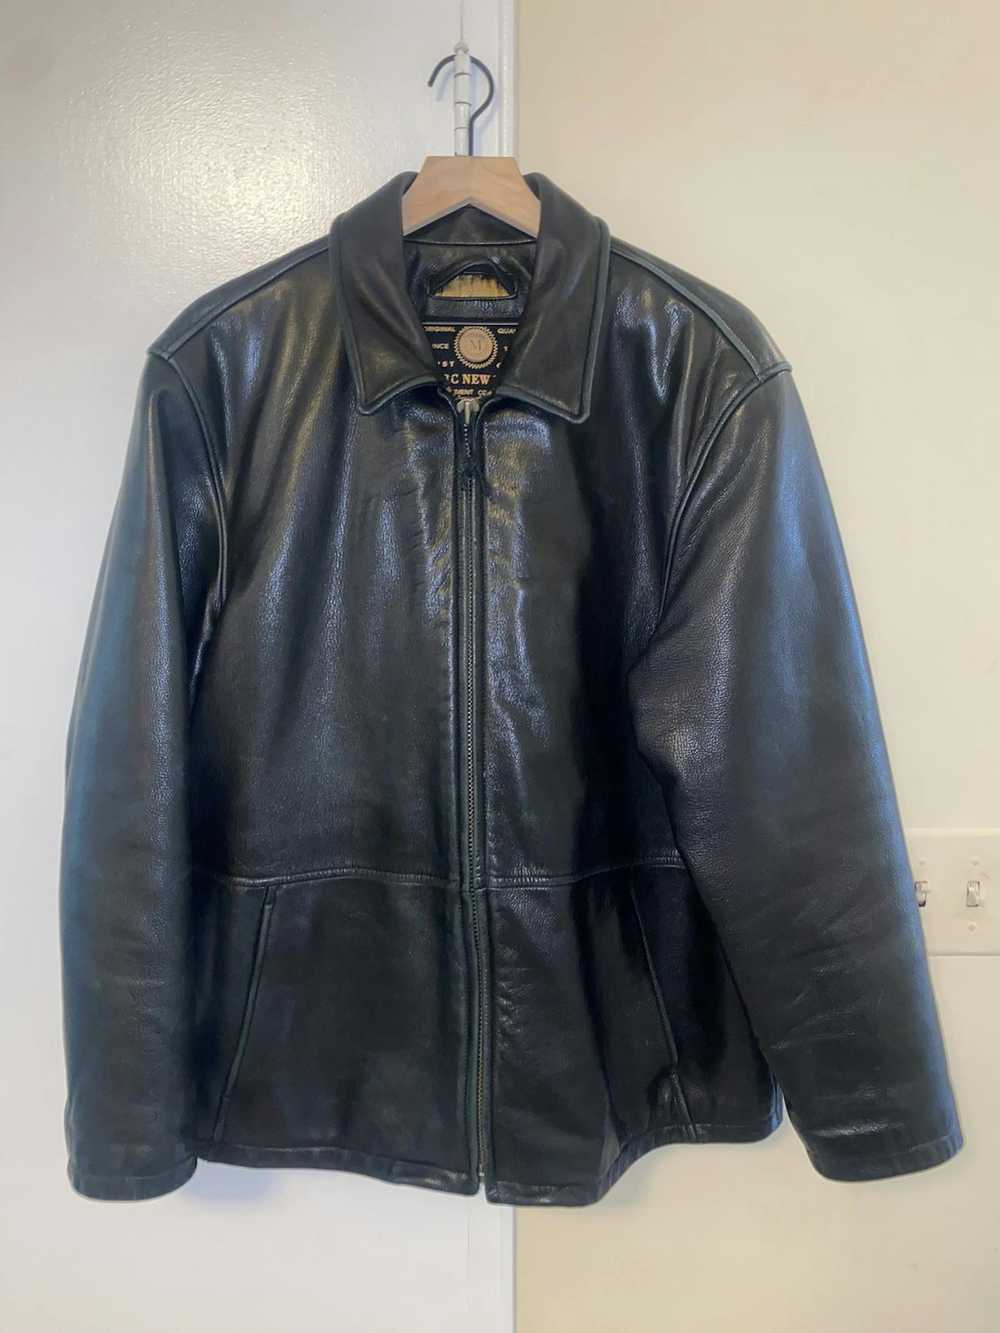 Vintage Dark green heavy leather jacket - image 2